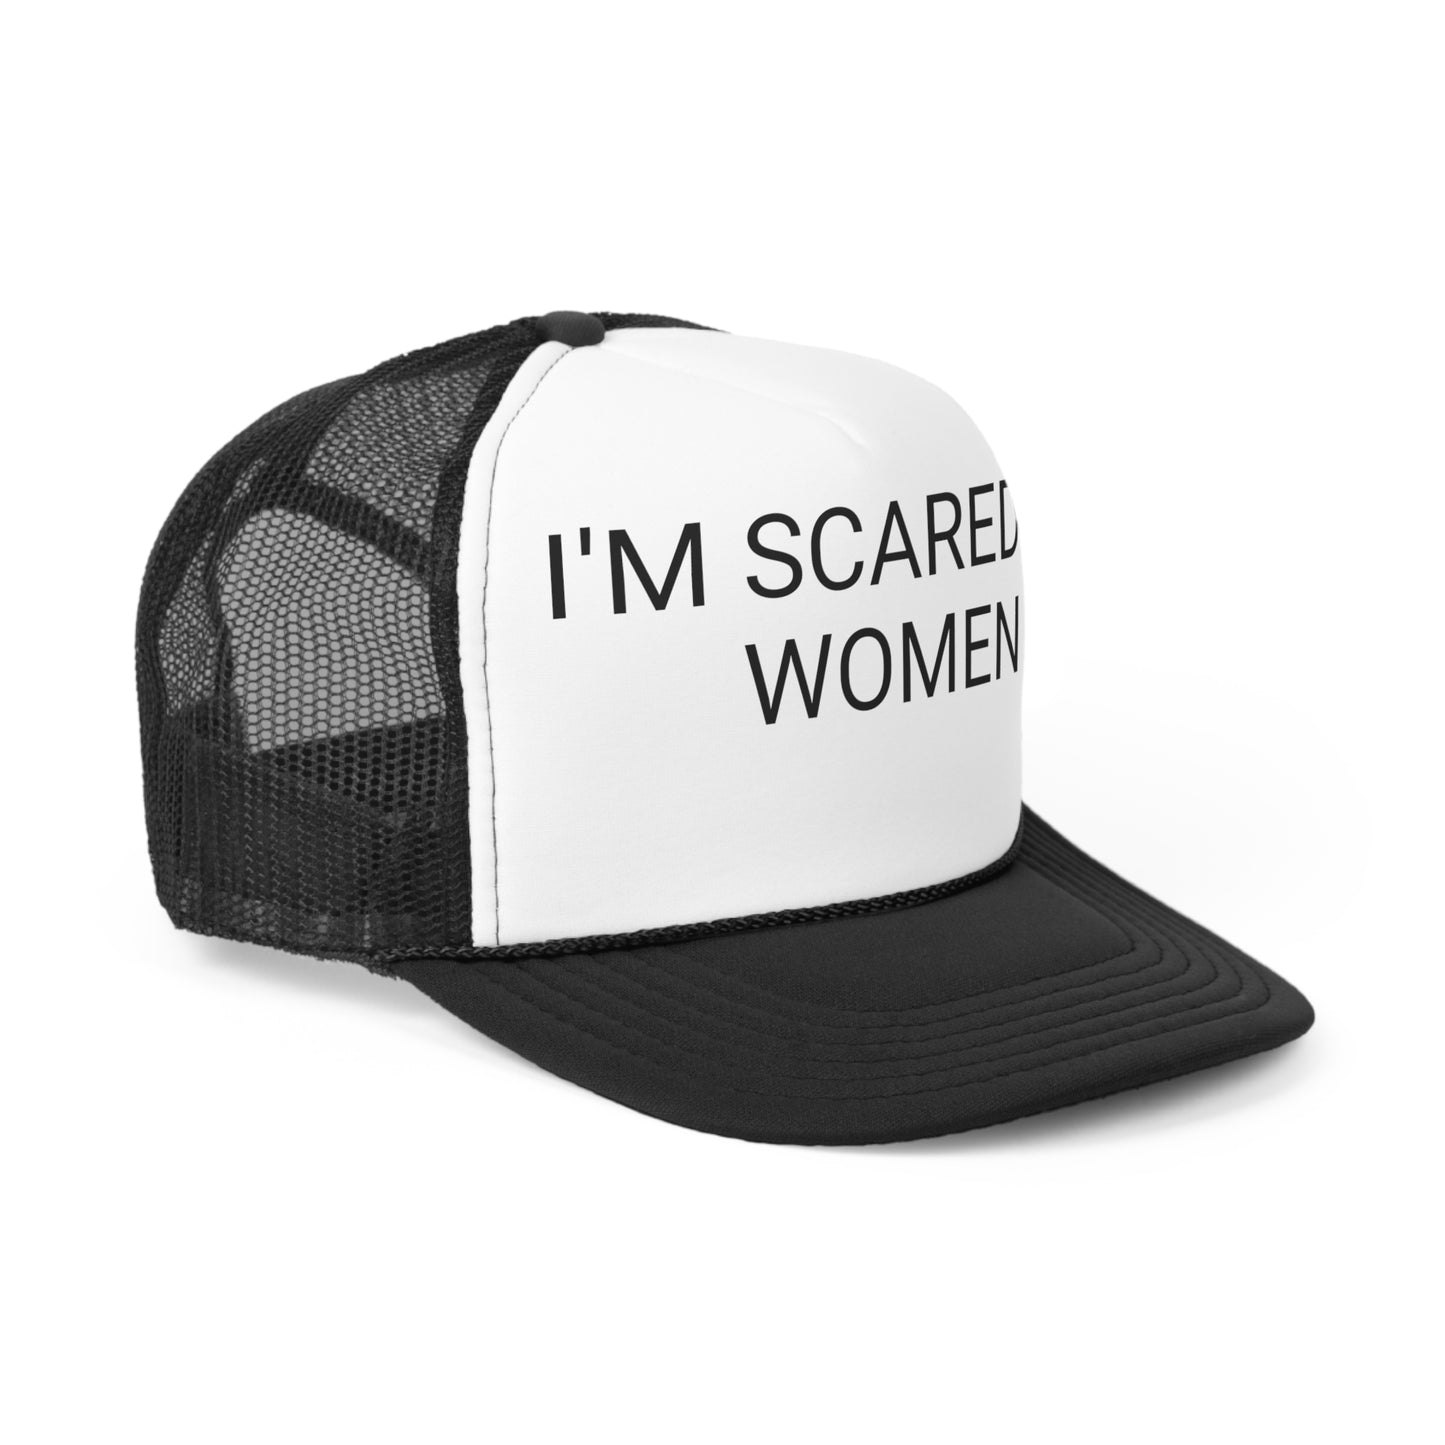 I'm scared of women Trucker Caps